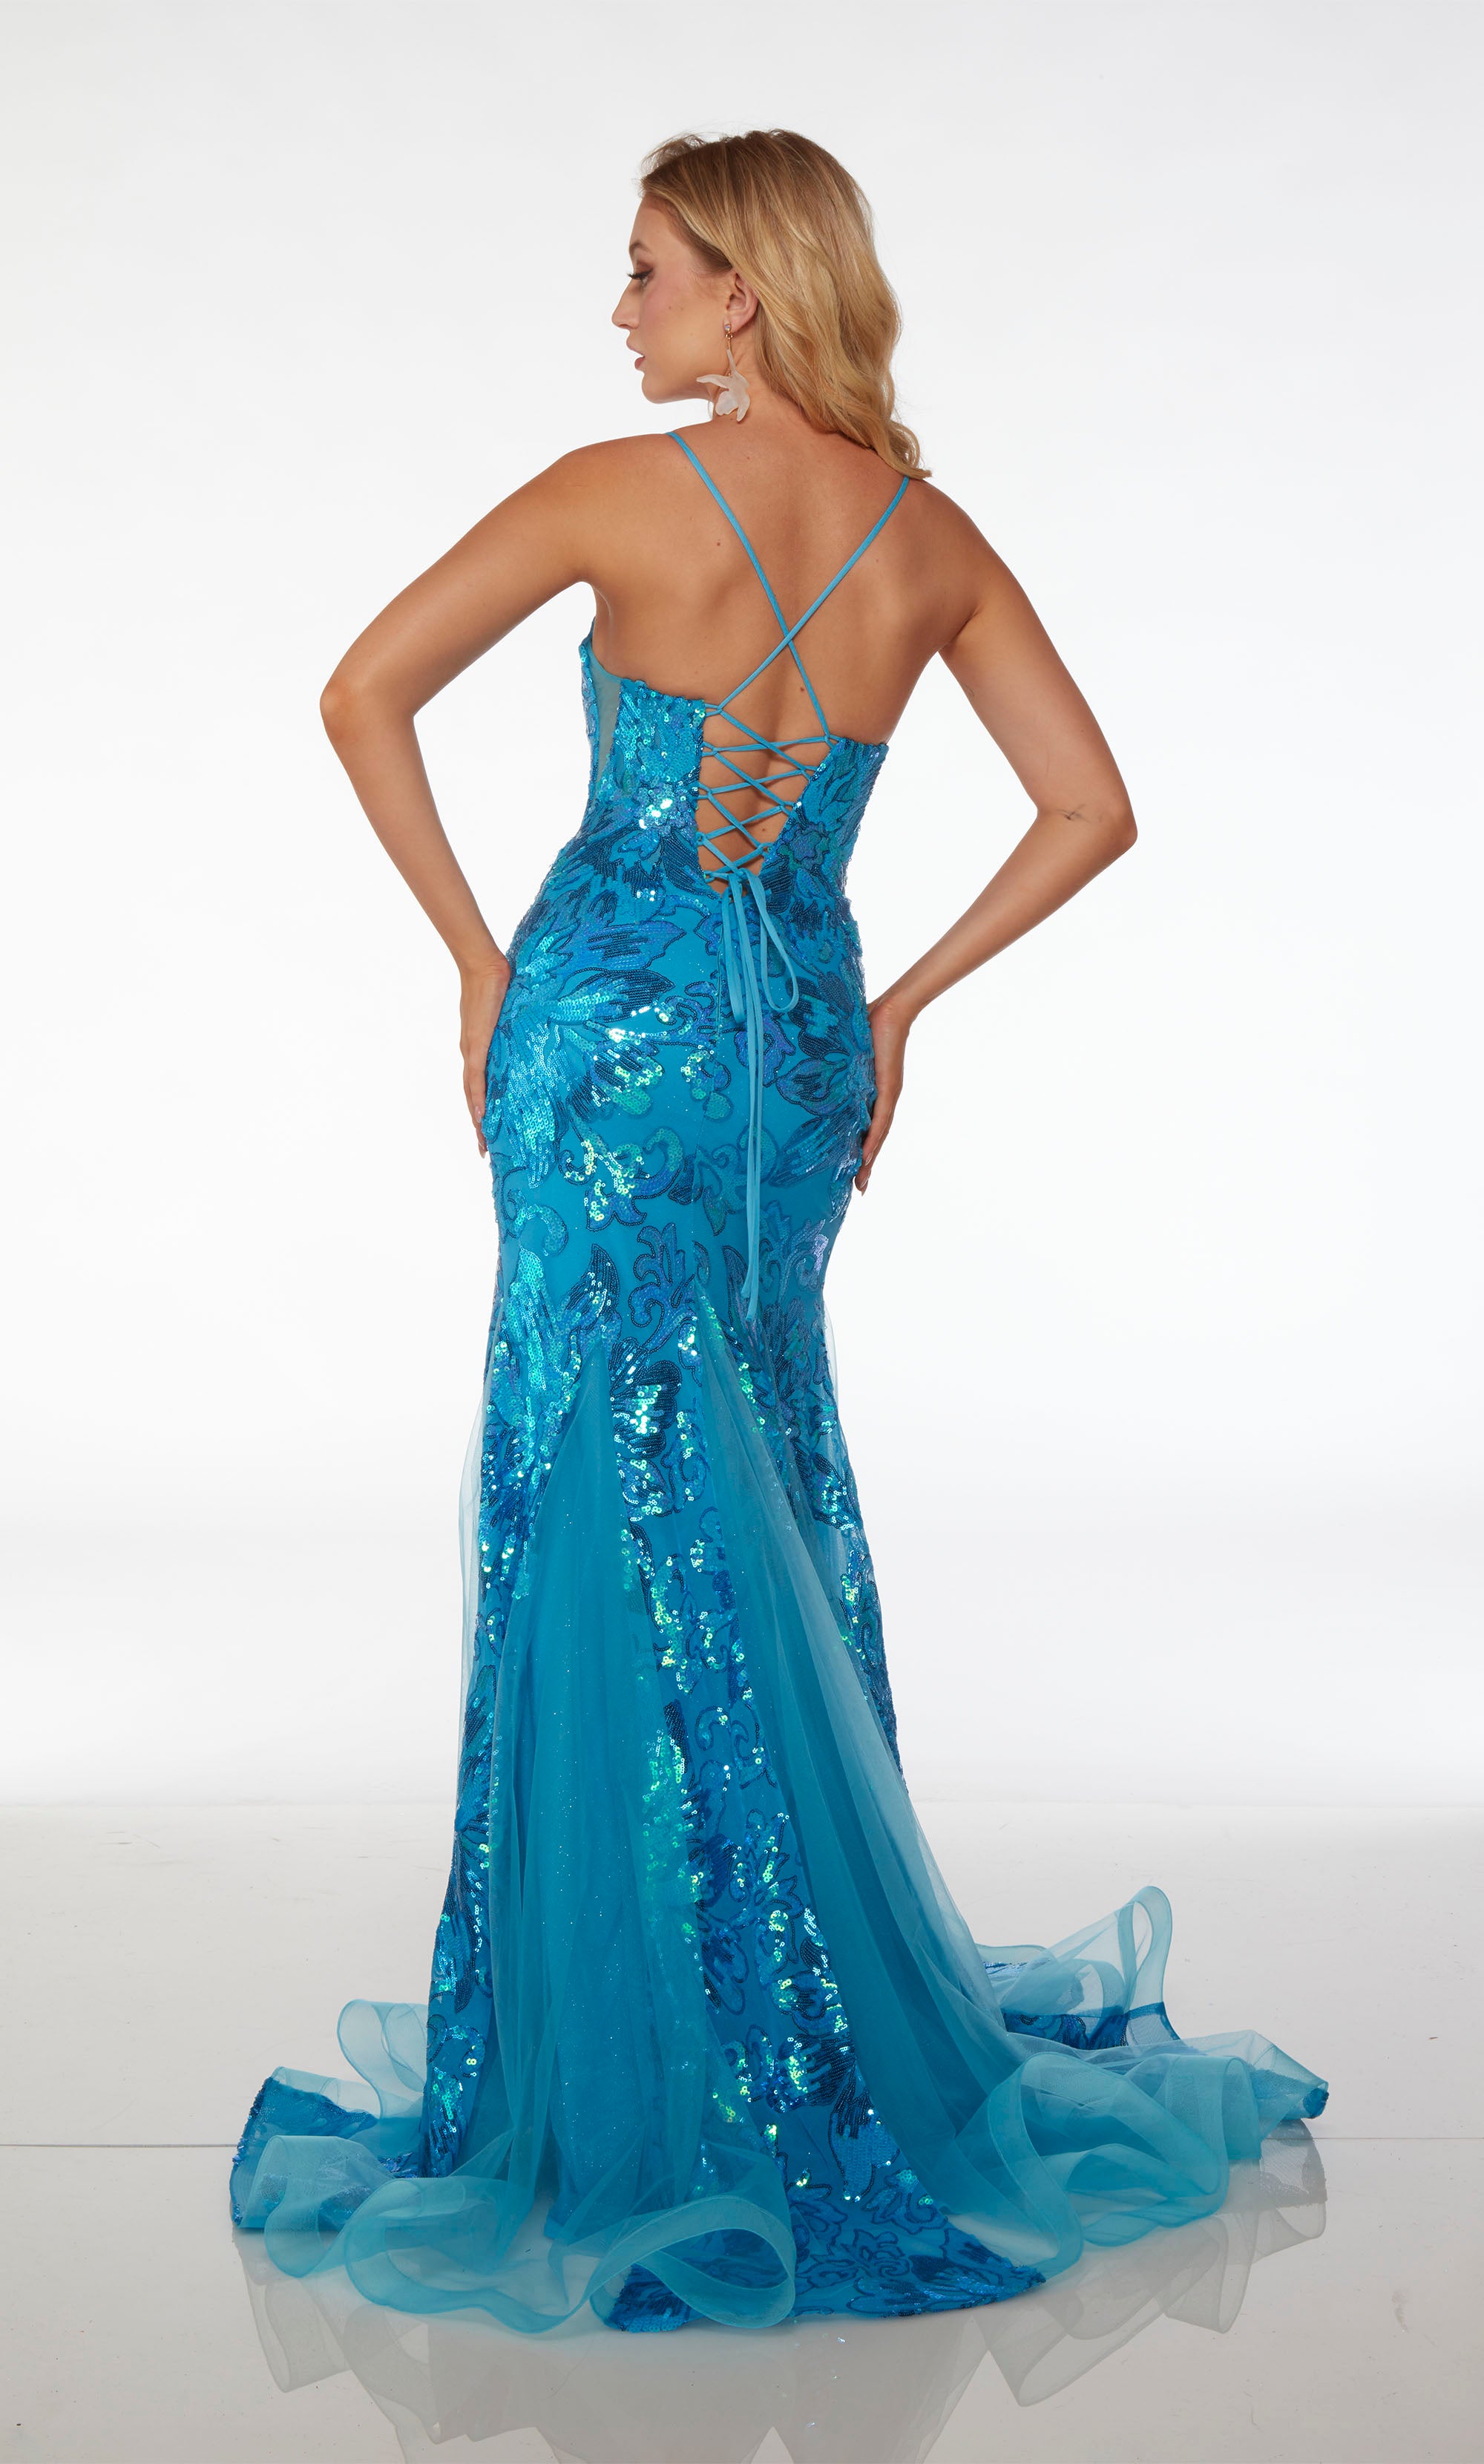 Vibrant blue mermaid dress: gorgeous sequin floral design, plunging neckline, spaghetti straps, high slit, crisscross lace-up back, train.